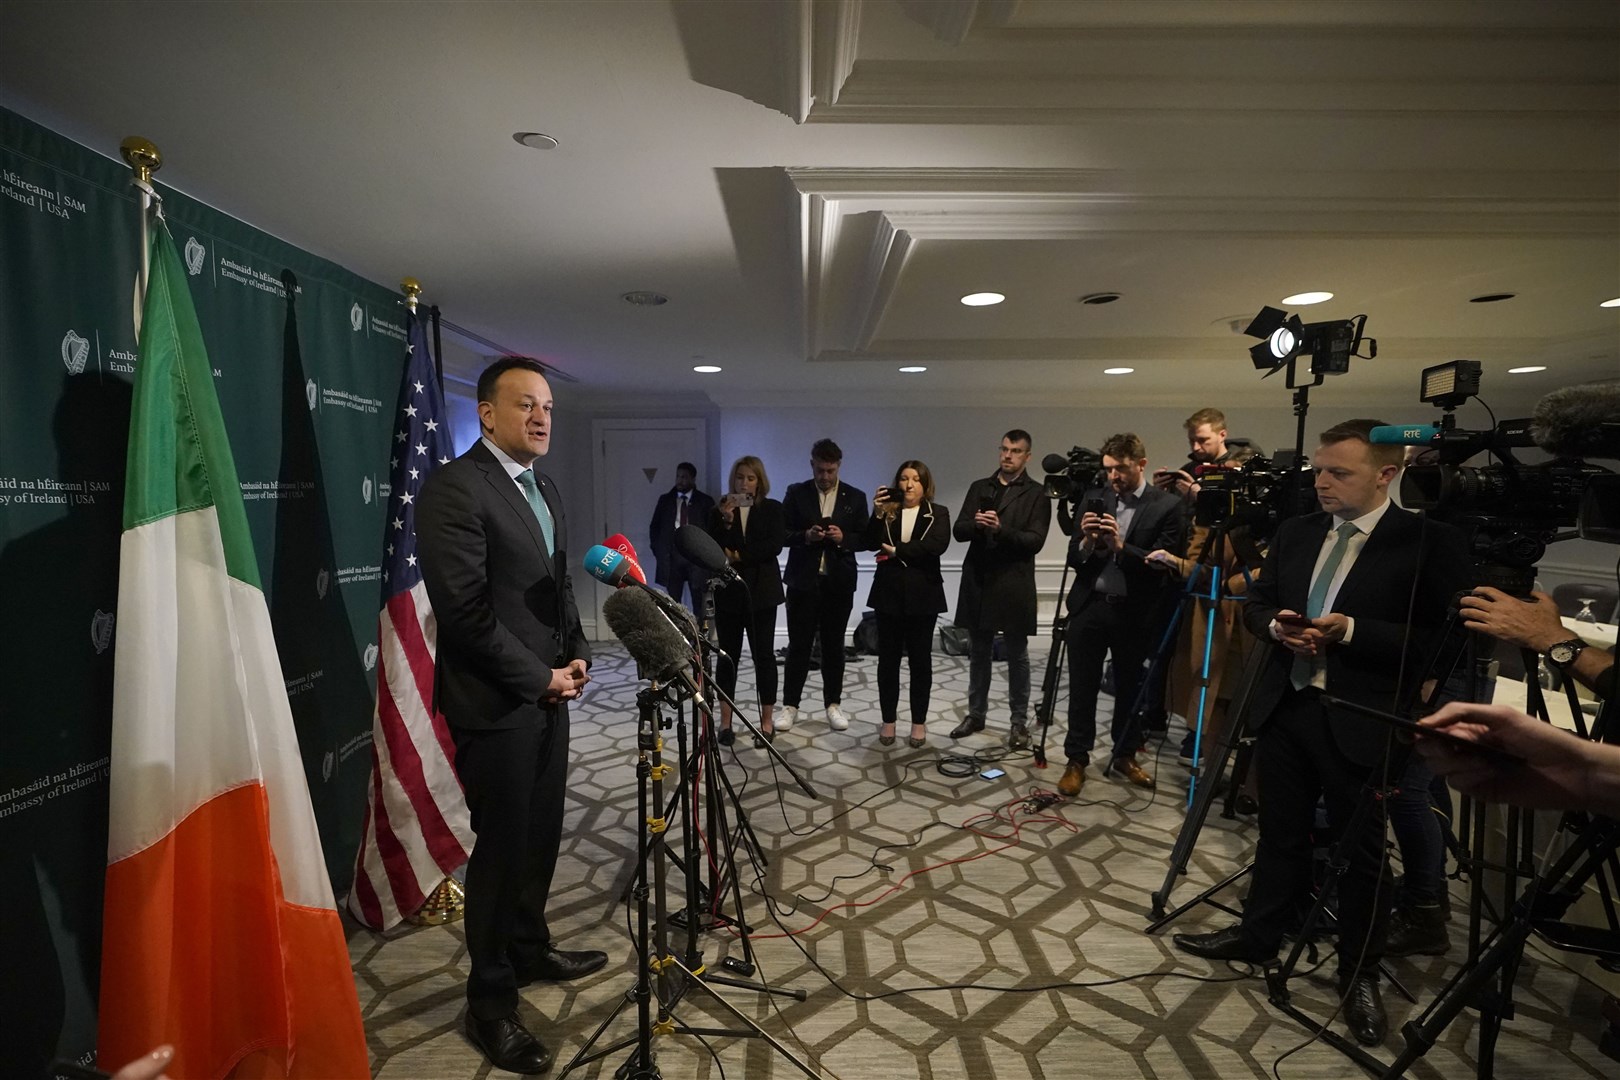 Taoiseach Leo Varadkar speaking in the Senate Room at the Mayflower Hotel in Washington, DC (Niall Carson/PA)